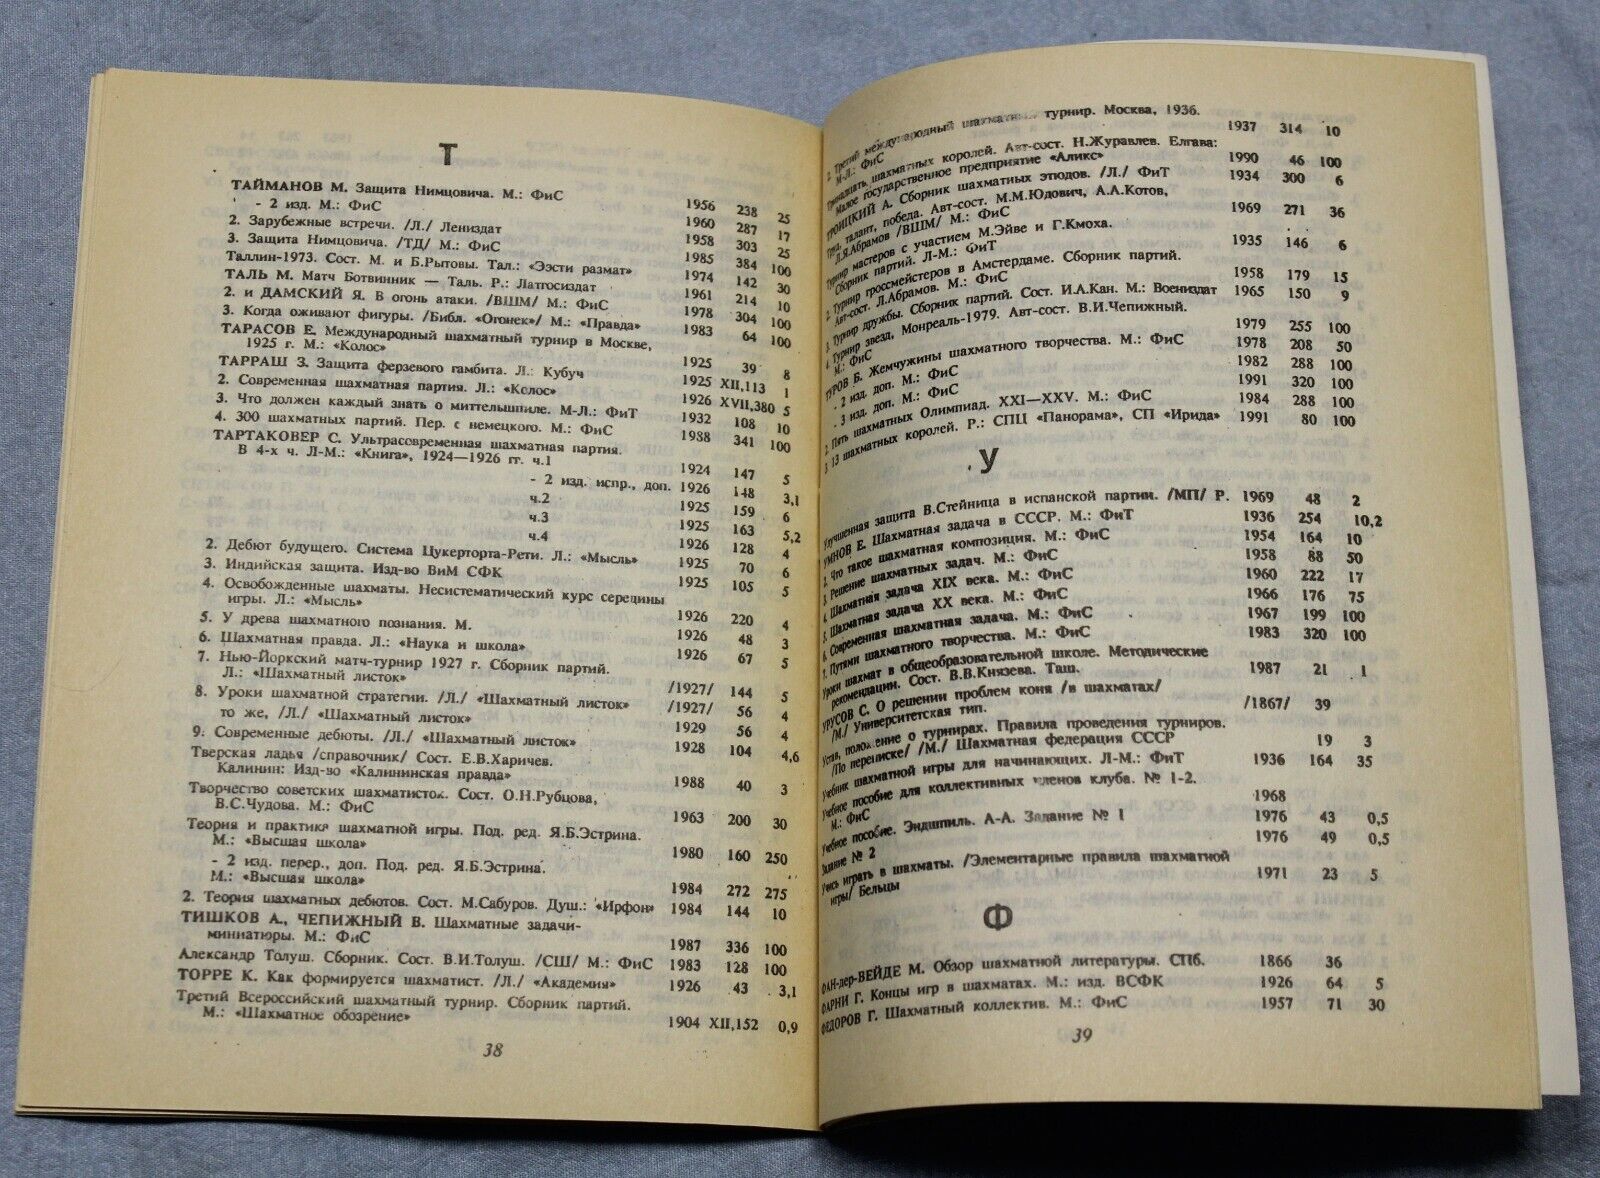 11060.Chess book: Catalog of Chess Literature 1791-1992 100 copies St. Petersburg 1993